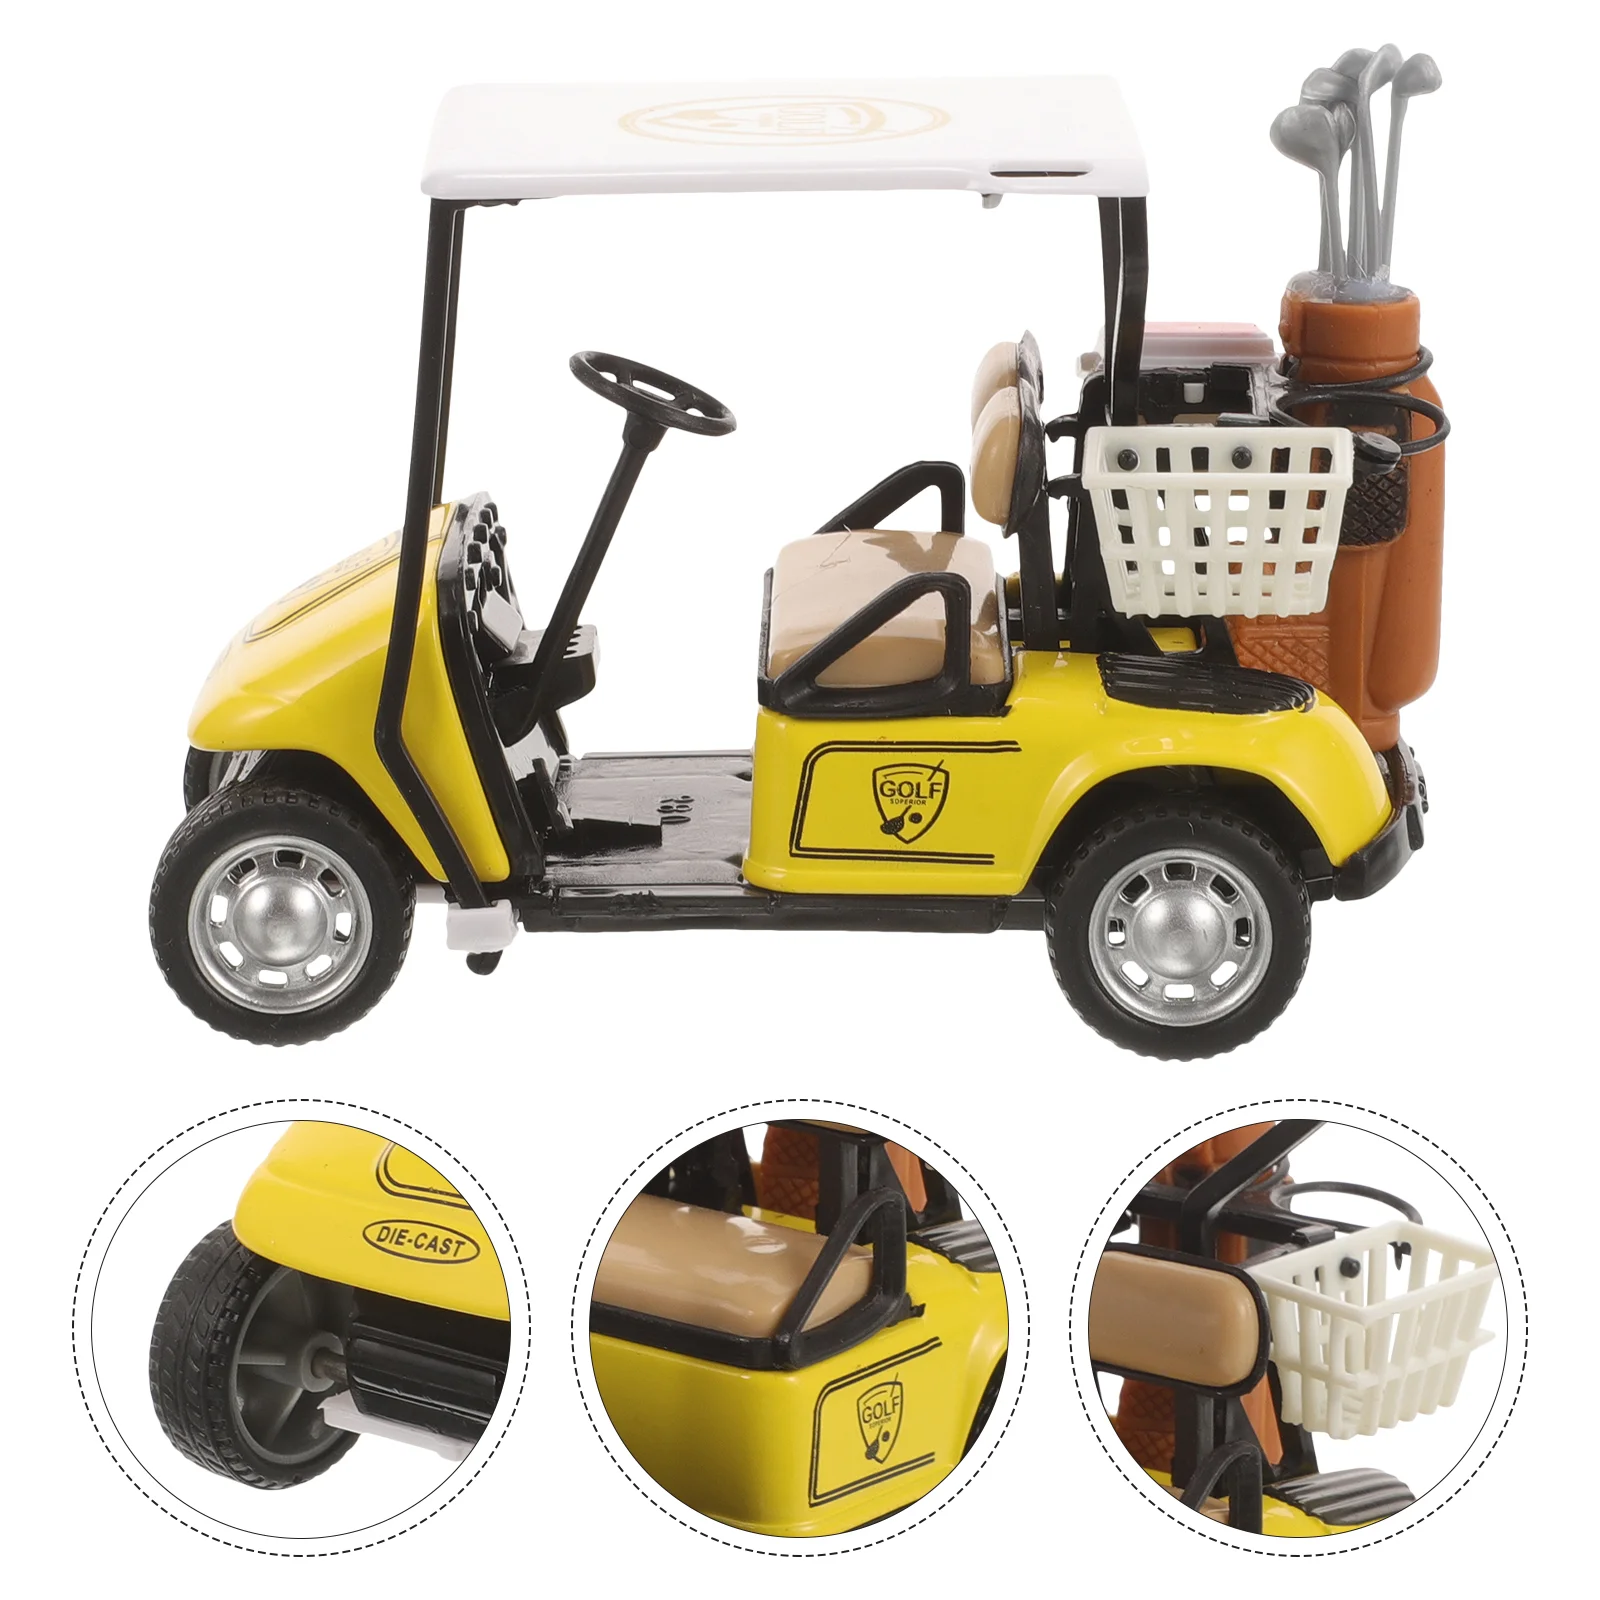 

Practical Crafts Golf Cart Ornament Desktop Simple Automobile Model Decoration Realistic Toys